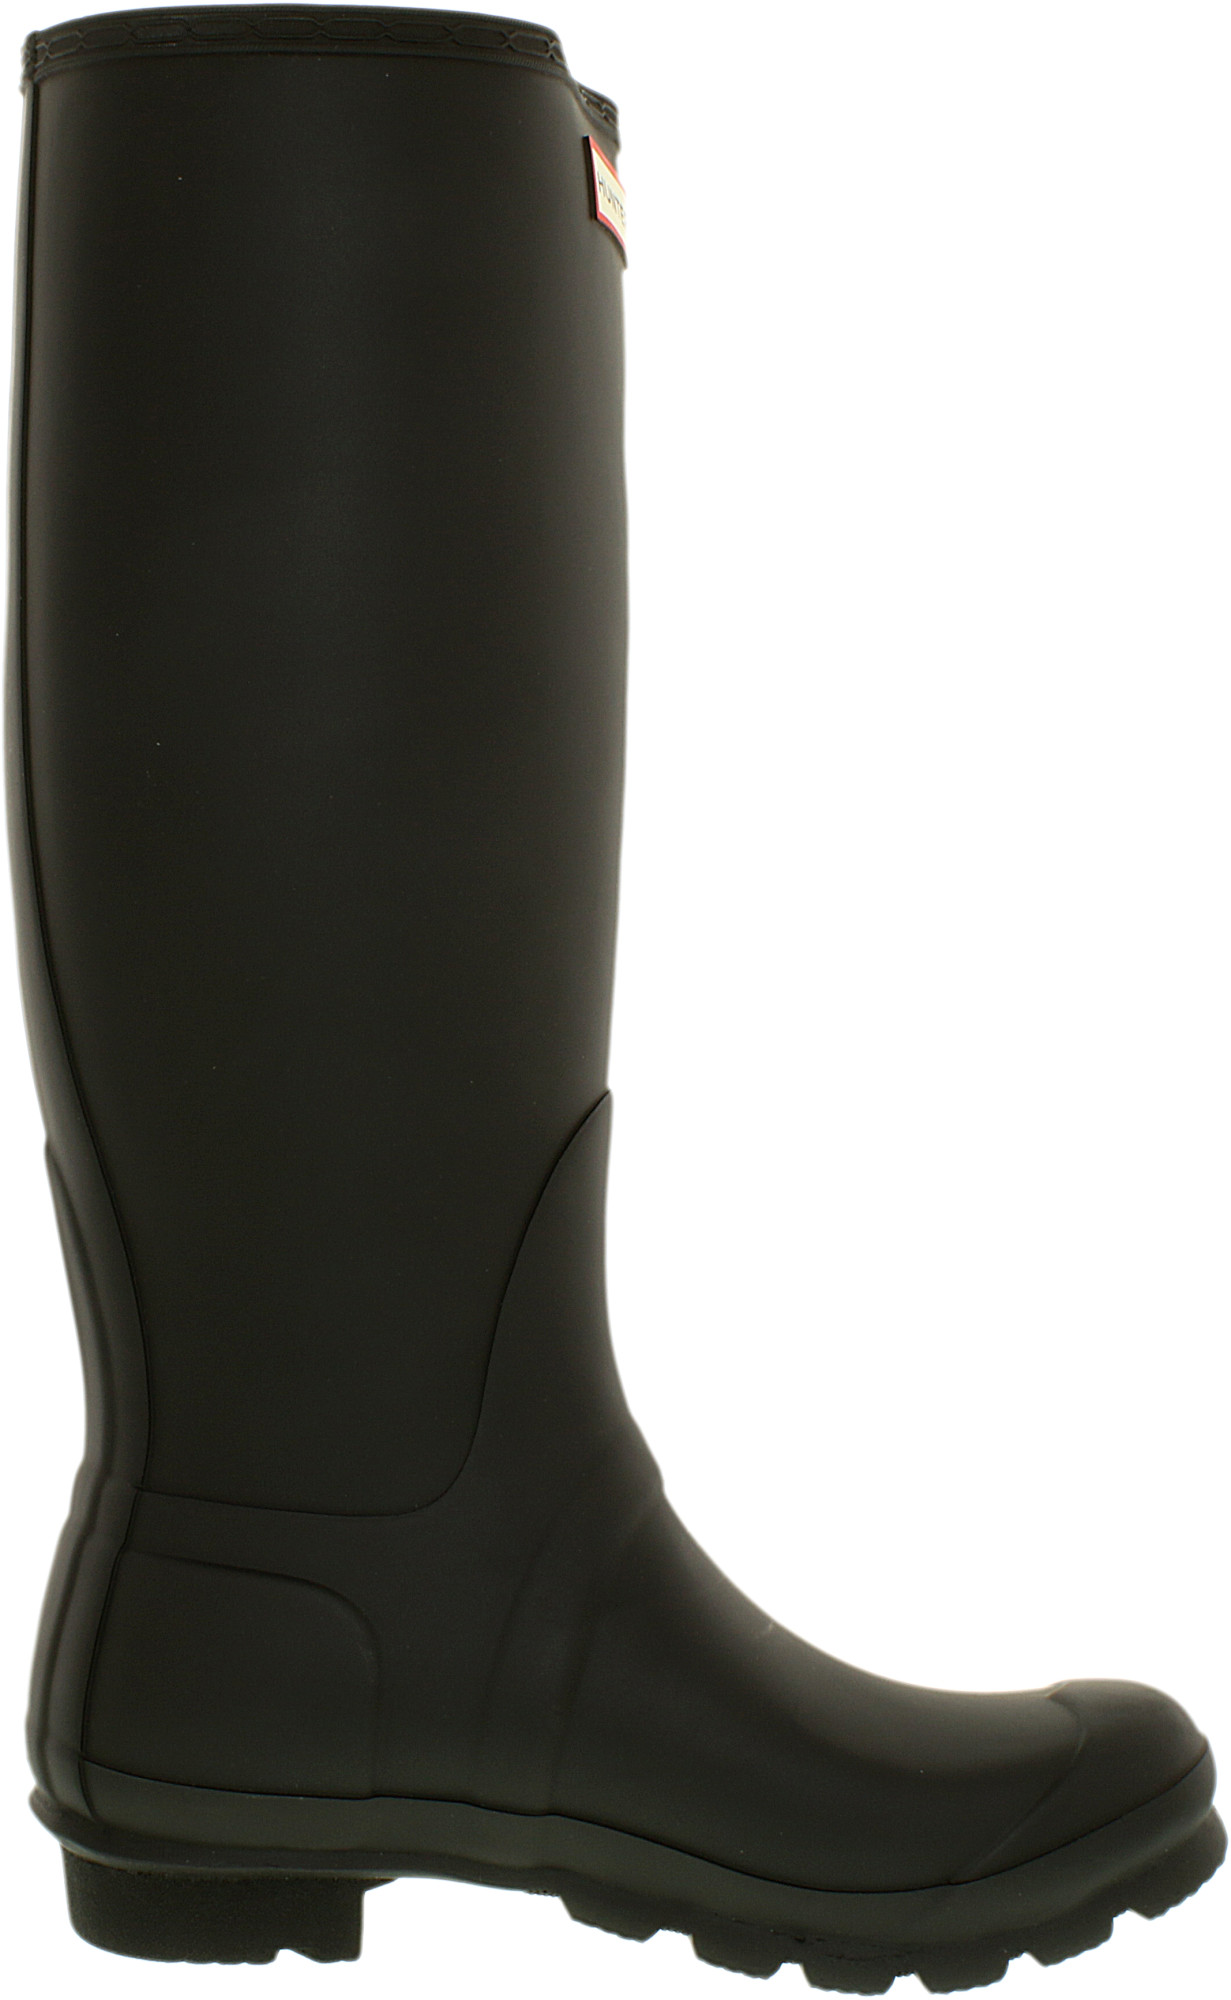 Hunter Women's Original Tall Rain Boots - image 3 of 3